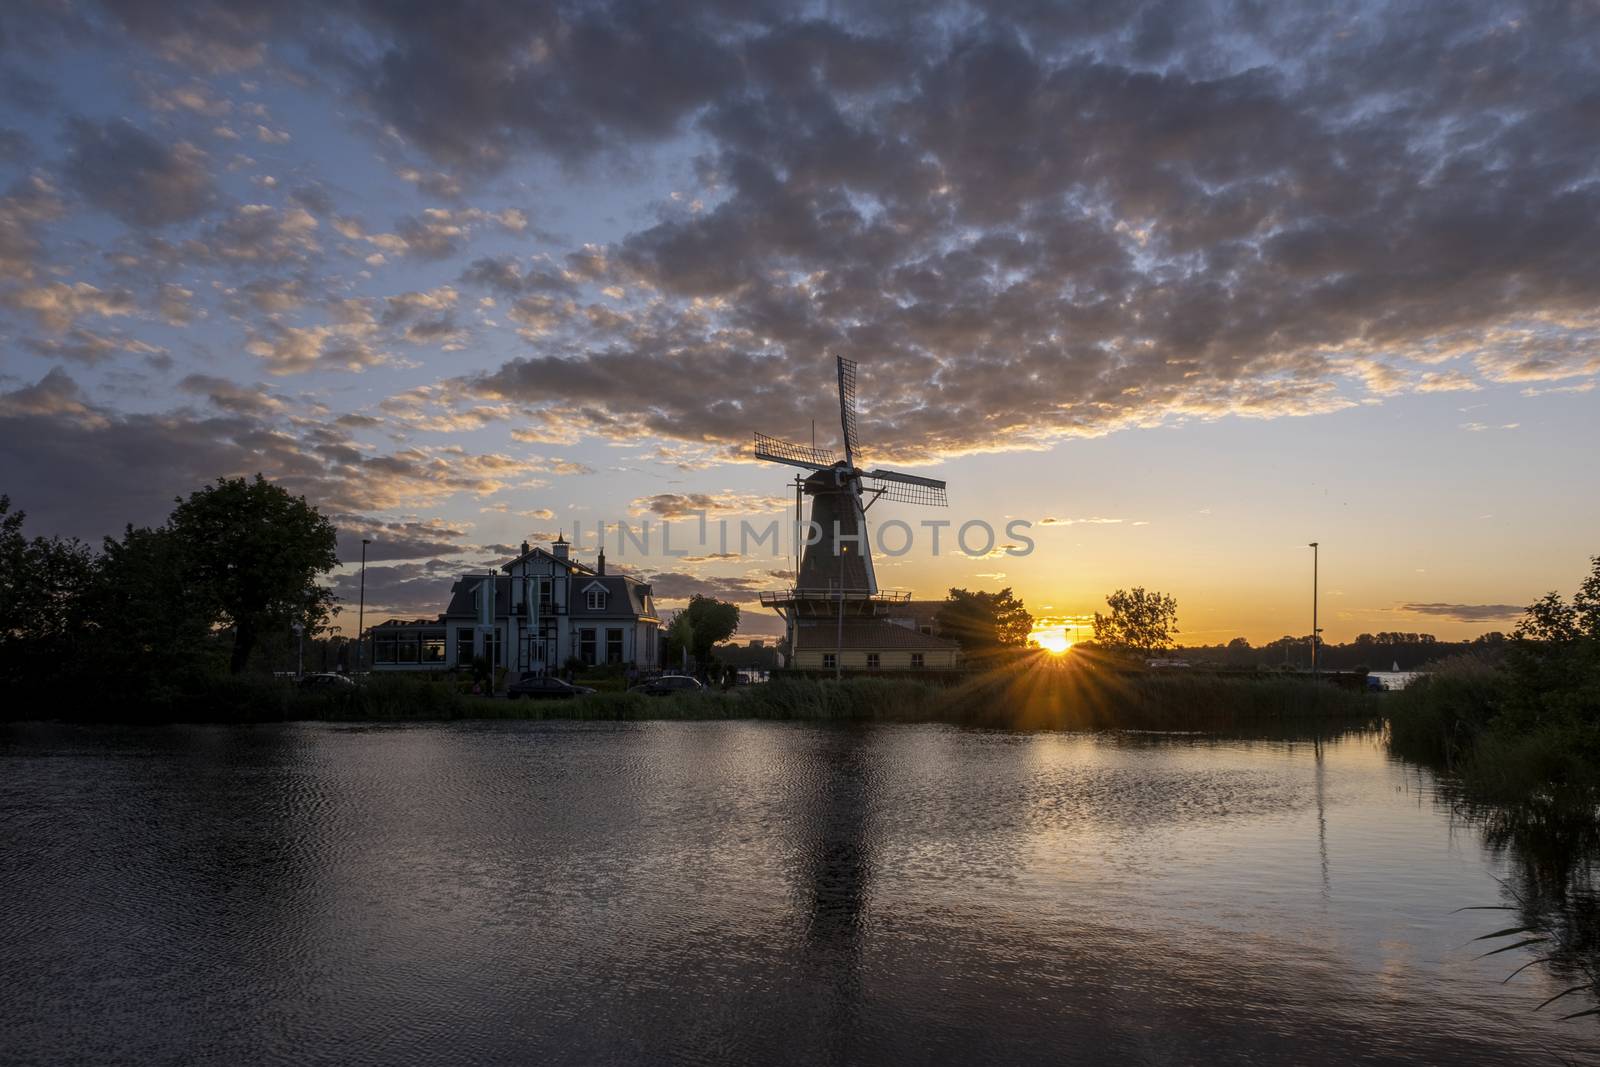 Sundown with Dutch windmill in the waters of Kralingse Plas, Rotterdam by Tjeerdkruse